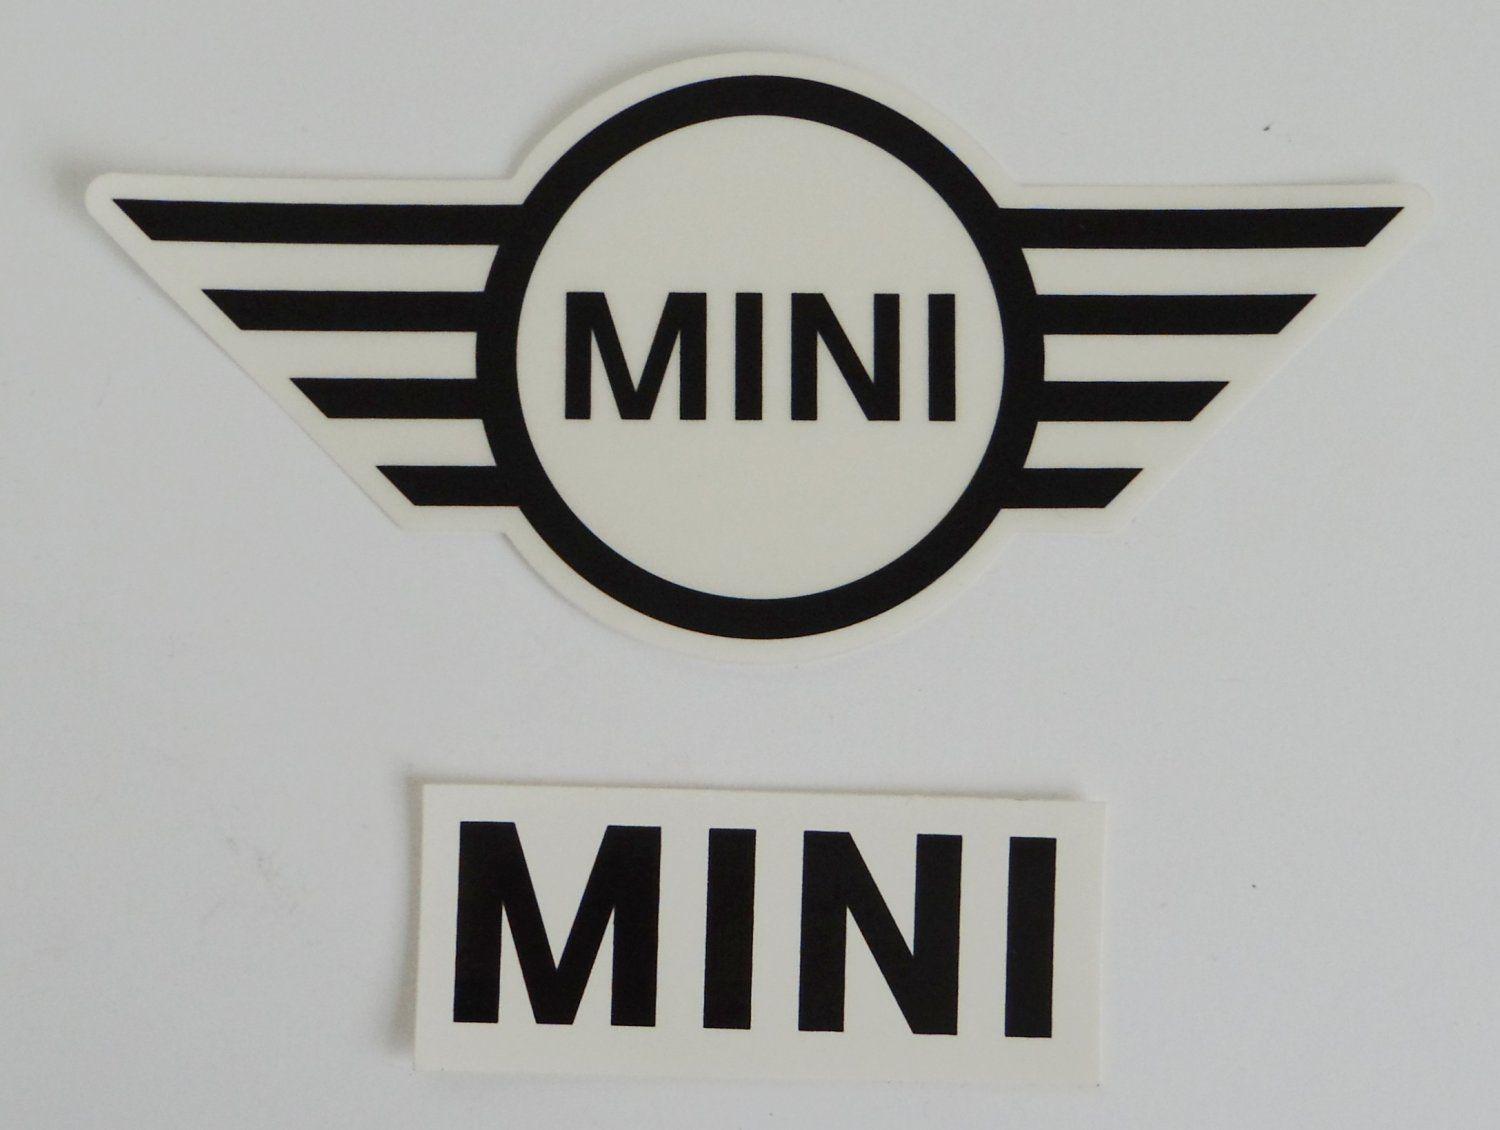 New Mini Cooper Logo - Mini Cooper Logo Stickers JCW Works Stickers $4.99. Laptop